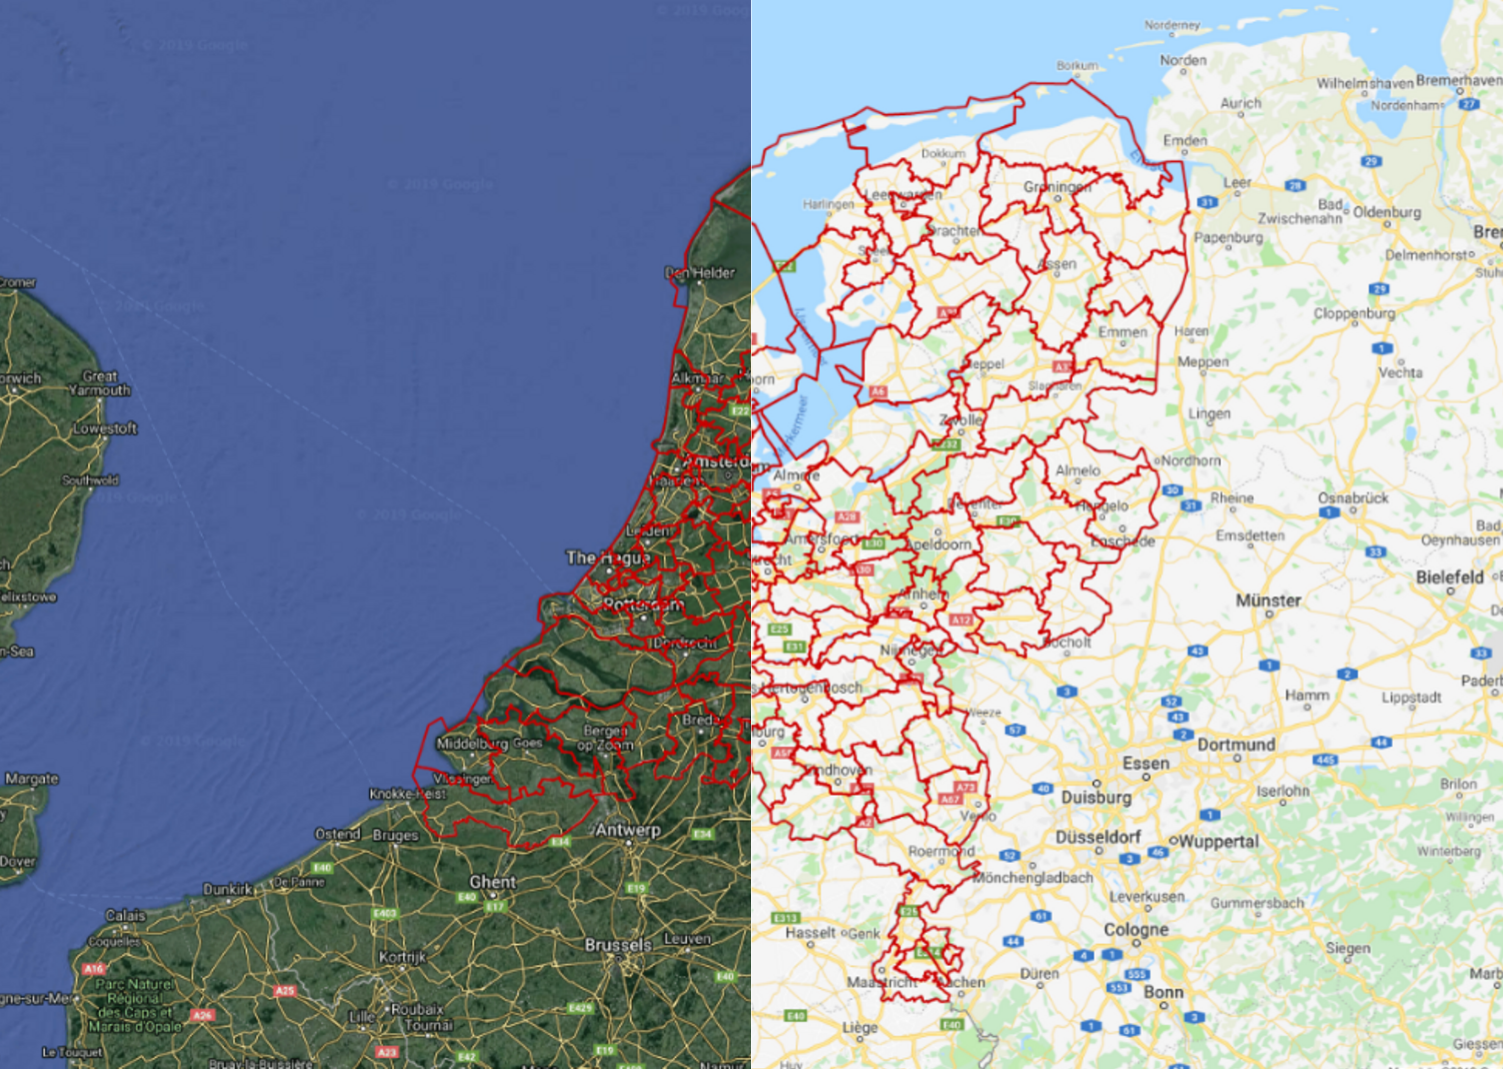 The Netherlands 2-Digit Postcode Boundaries